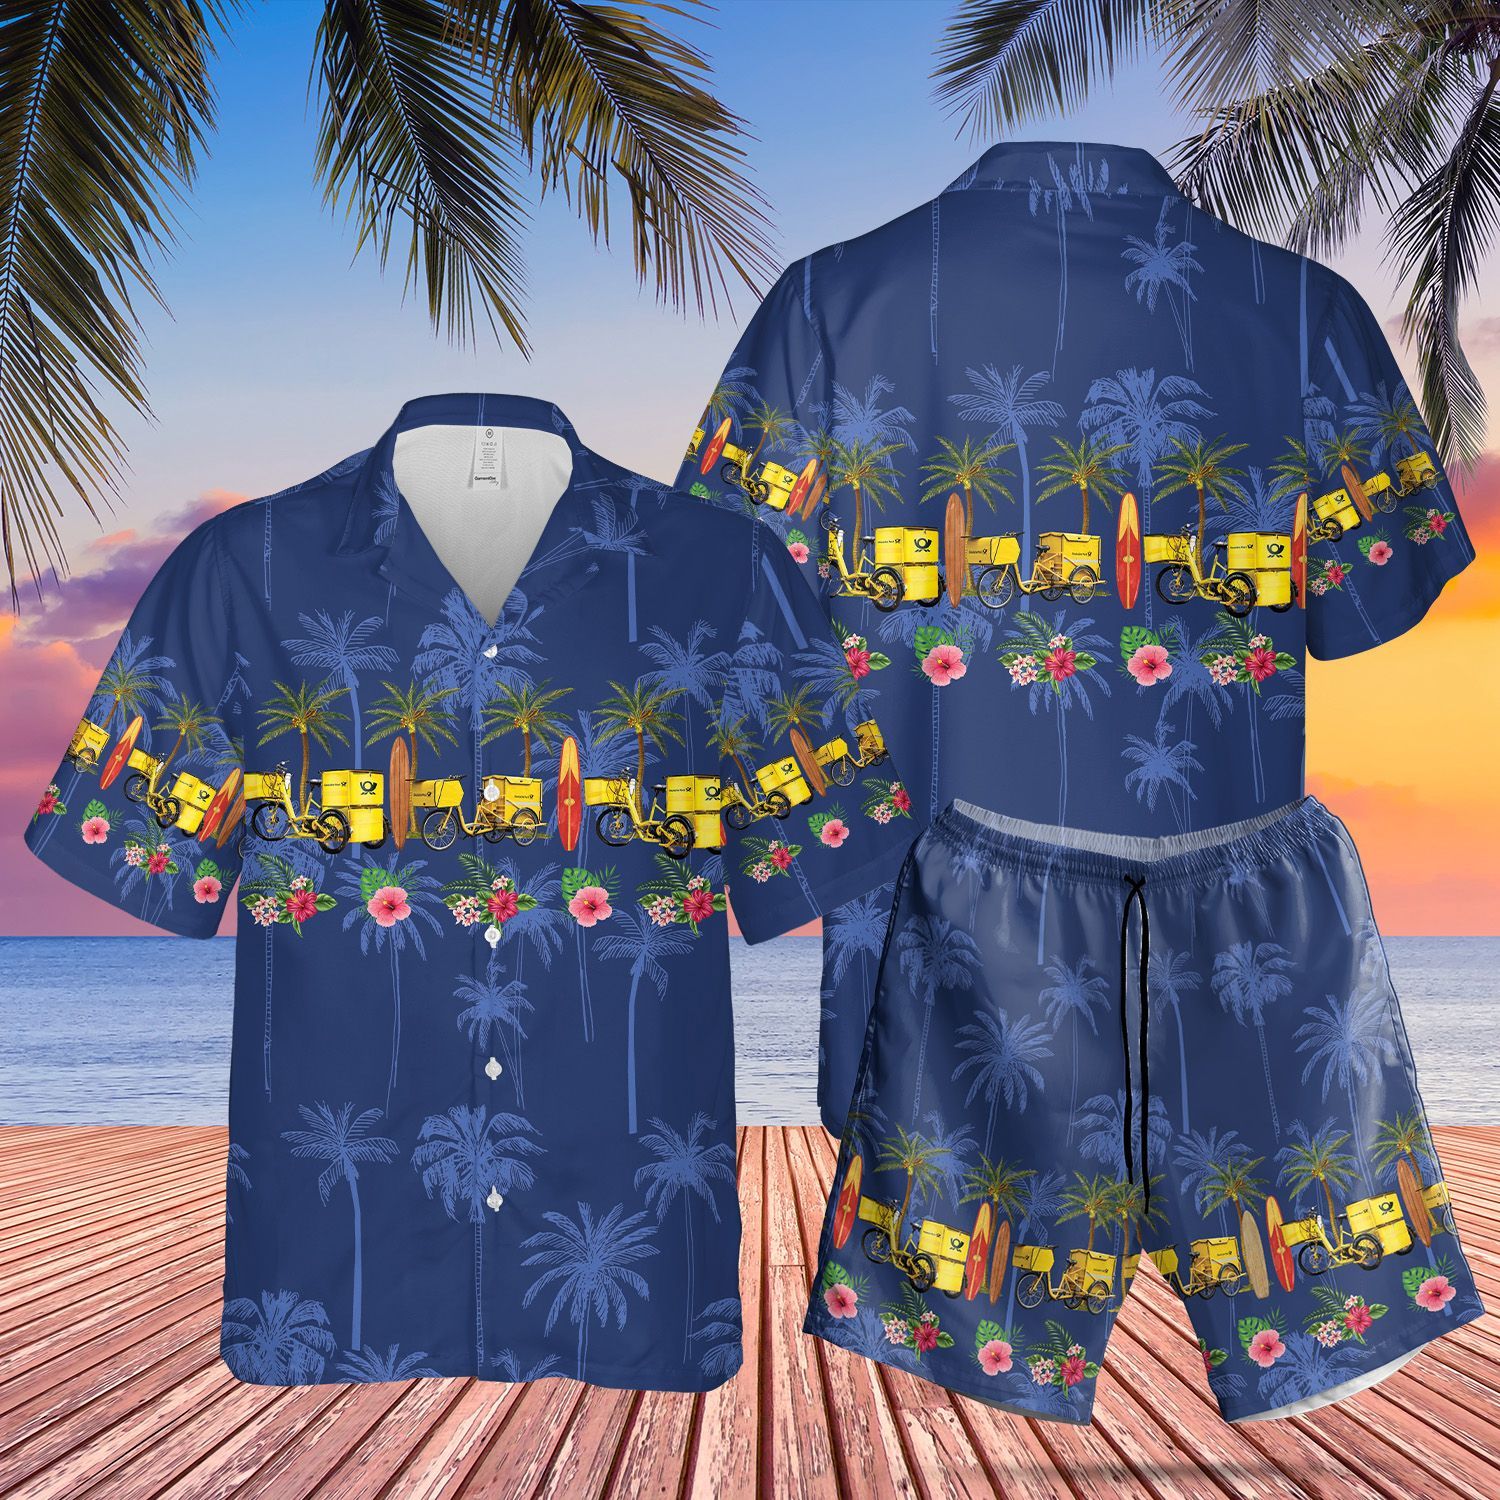 Enjoy your summer with top cool hawaiian shirt below 5